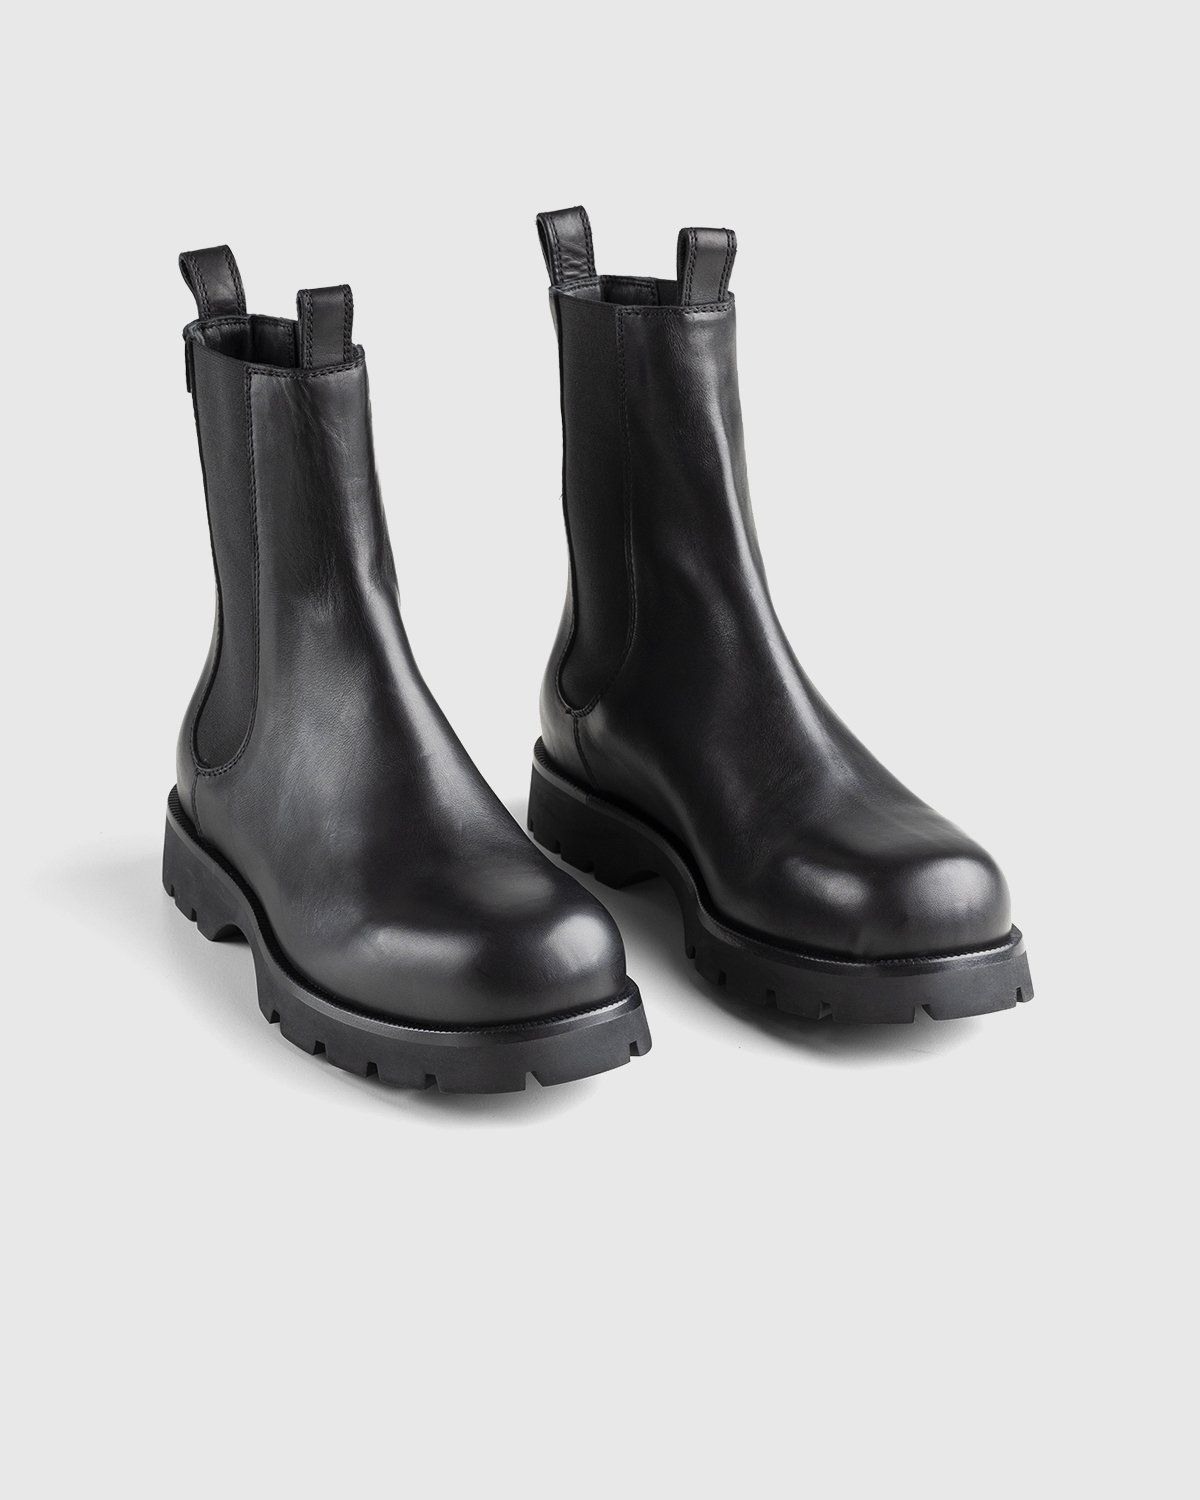 Jil Sander – Chelsea Boots Black - Chelsea Boots - Black - Image 3